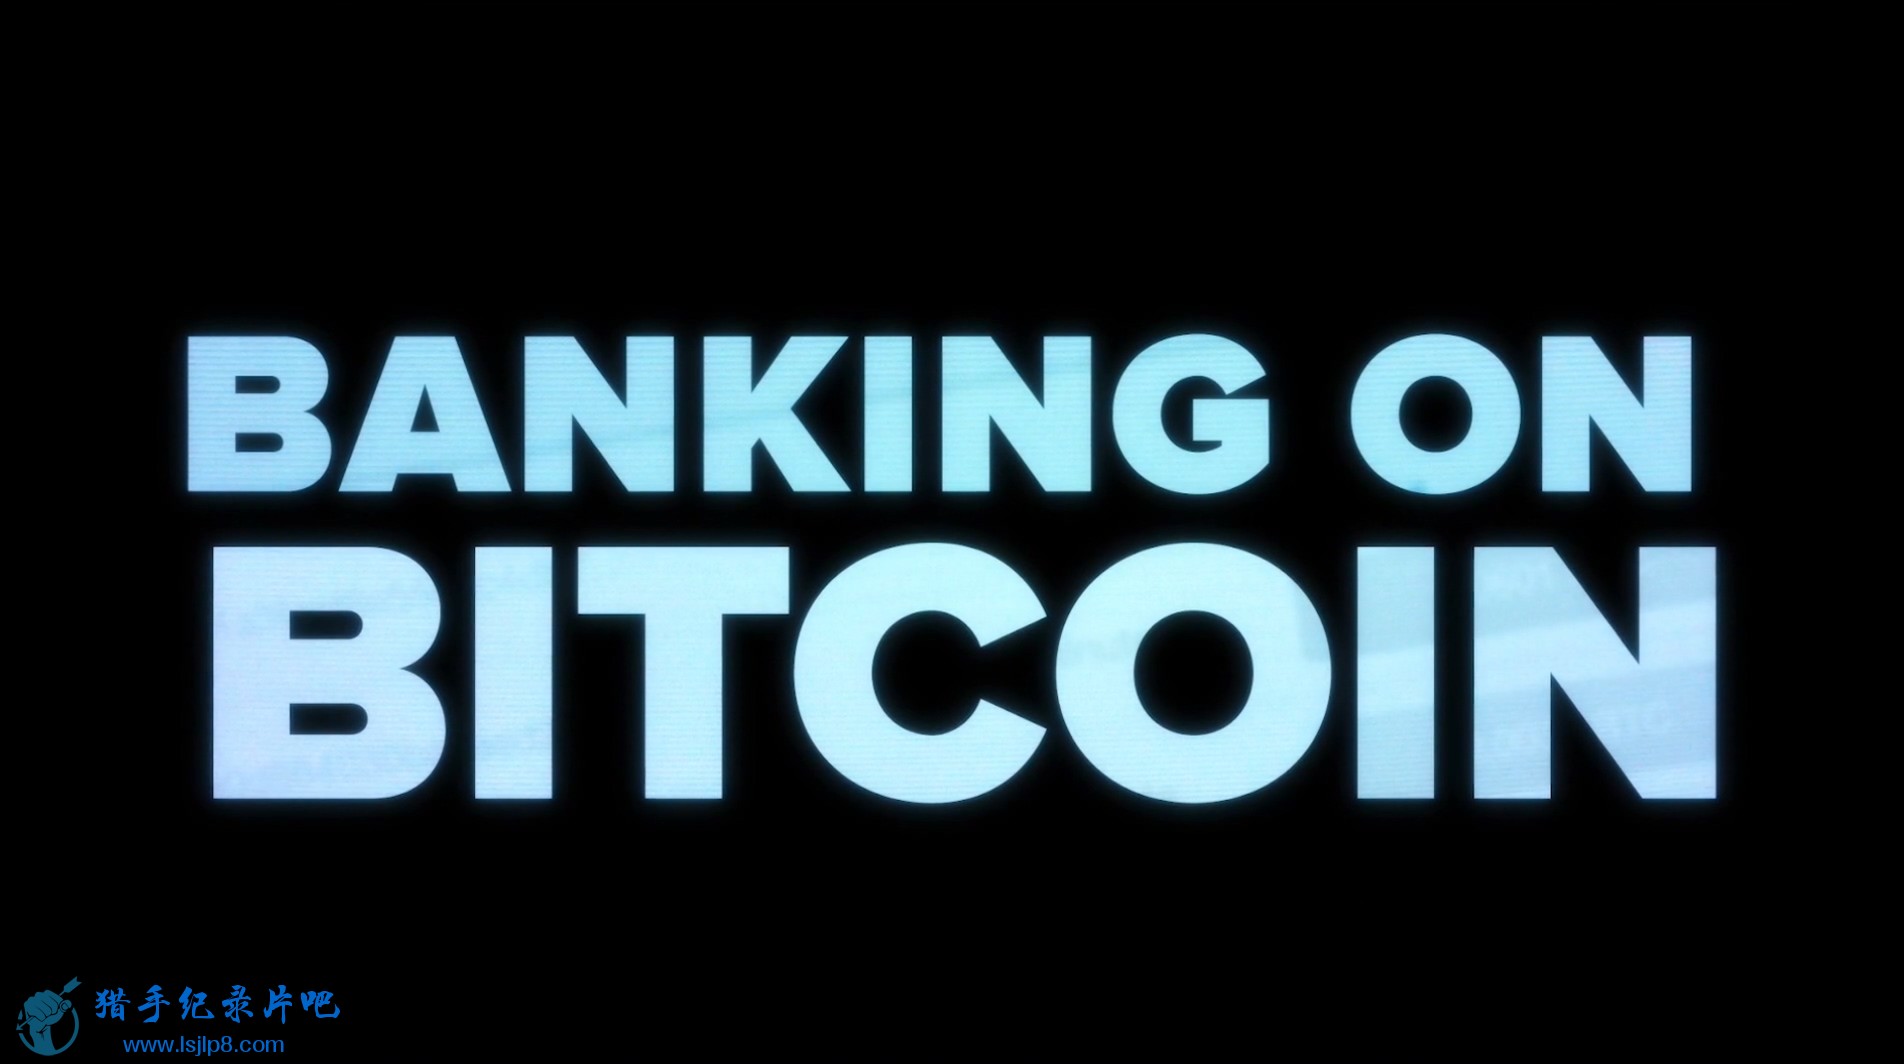 Banking.on.Bitcoin.2016.DOCU.1080p.WEB-DL.DD5.1.H264-FGT.mkv_20210805_114101.004.jpg